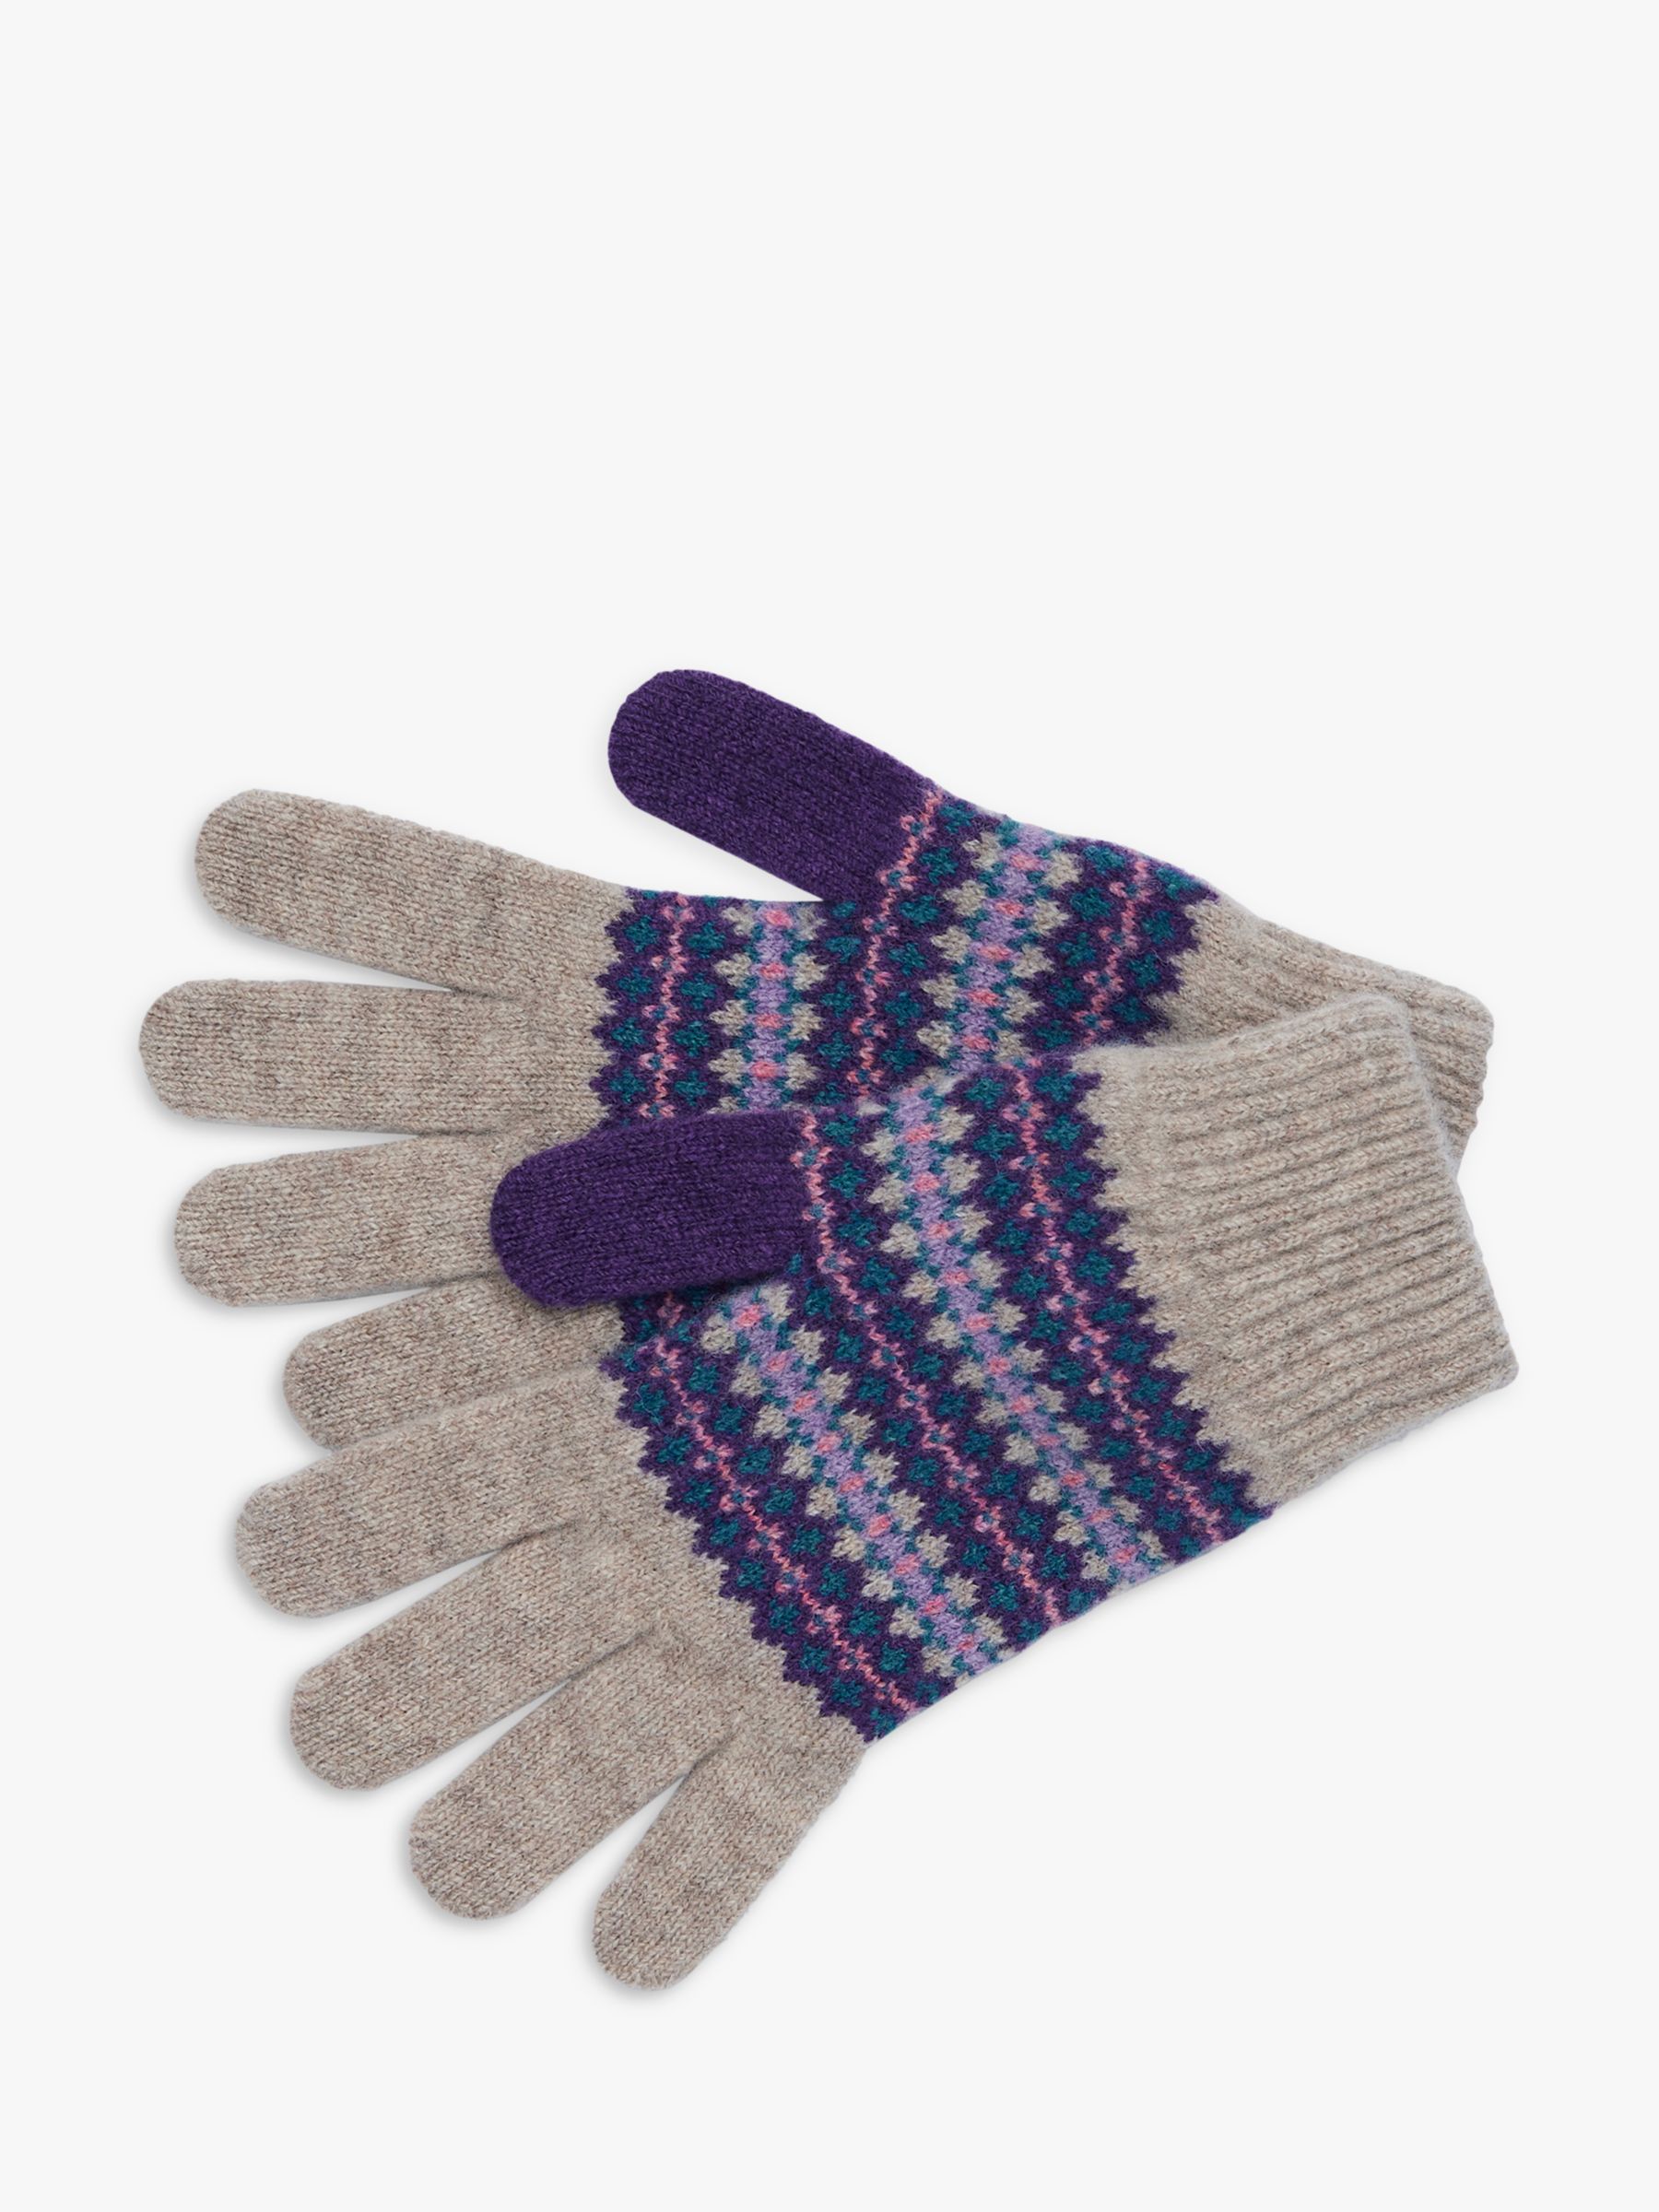 Fair Isle Lochinver Hat, Scarf & Gloves Set in Olive